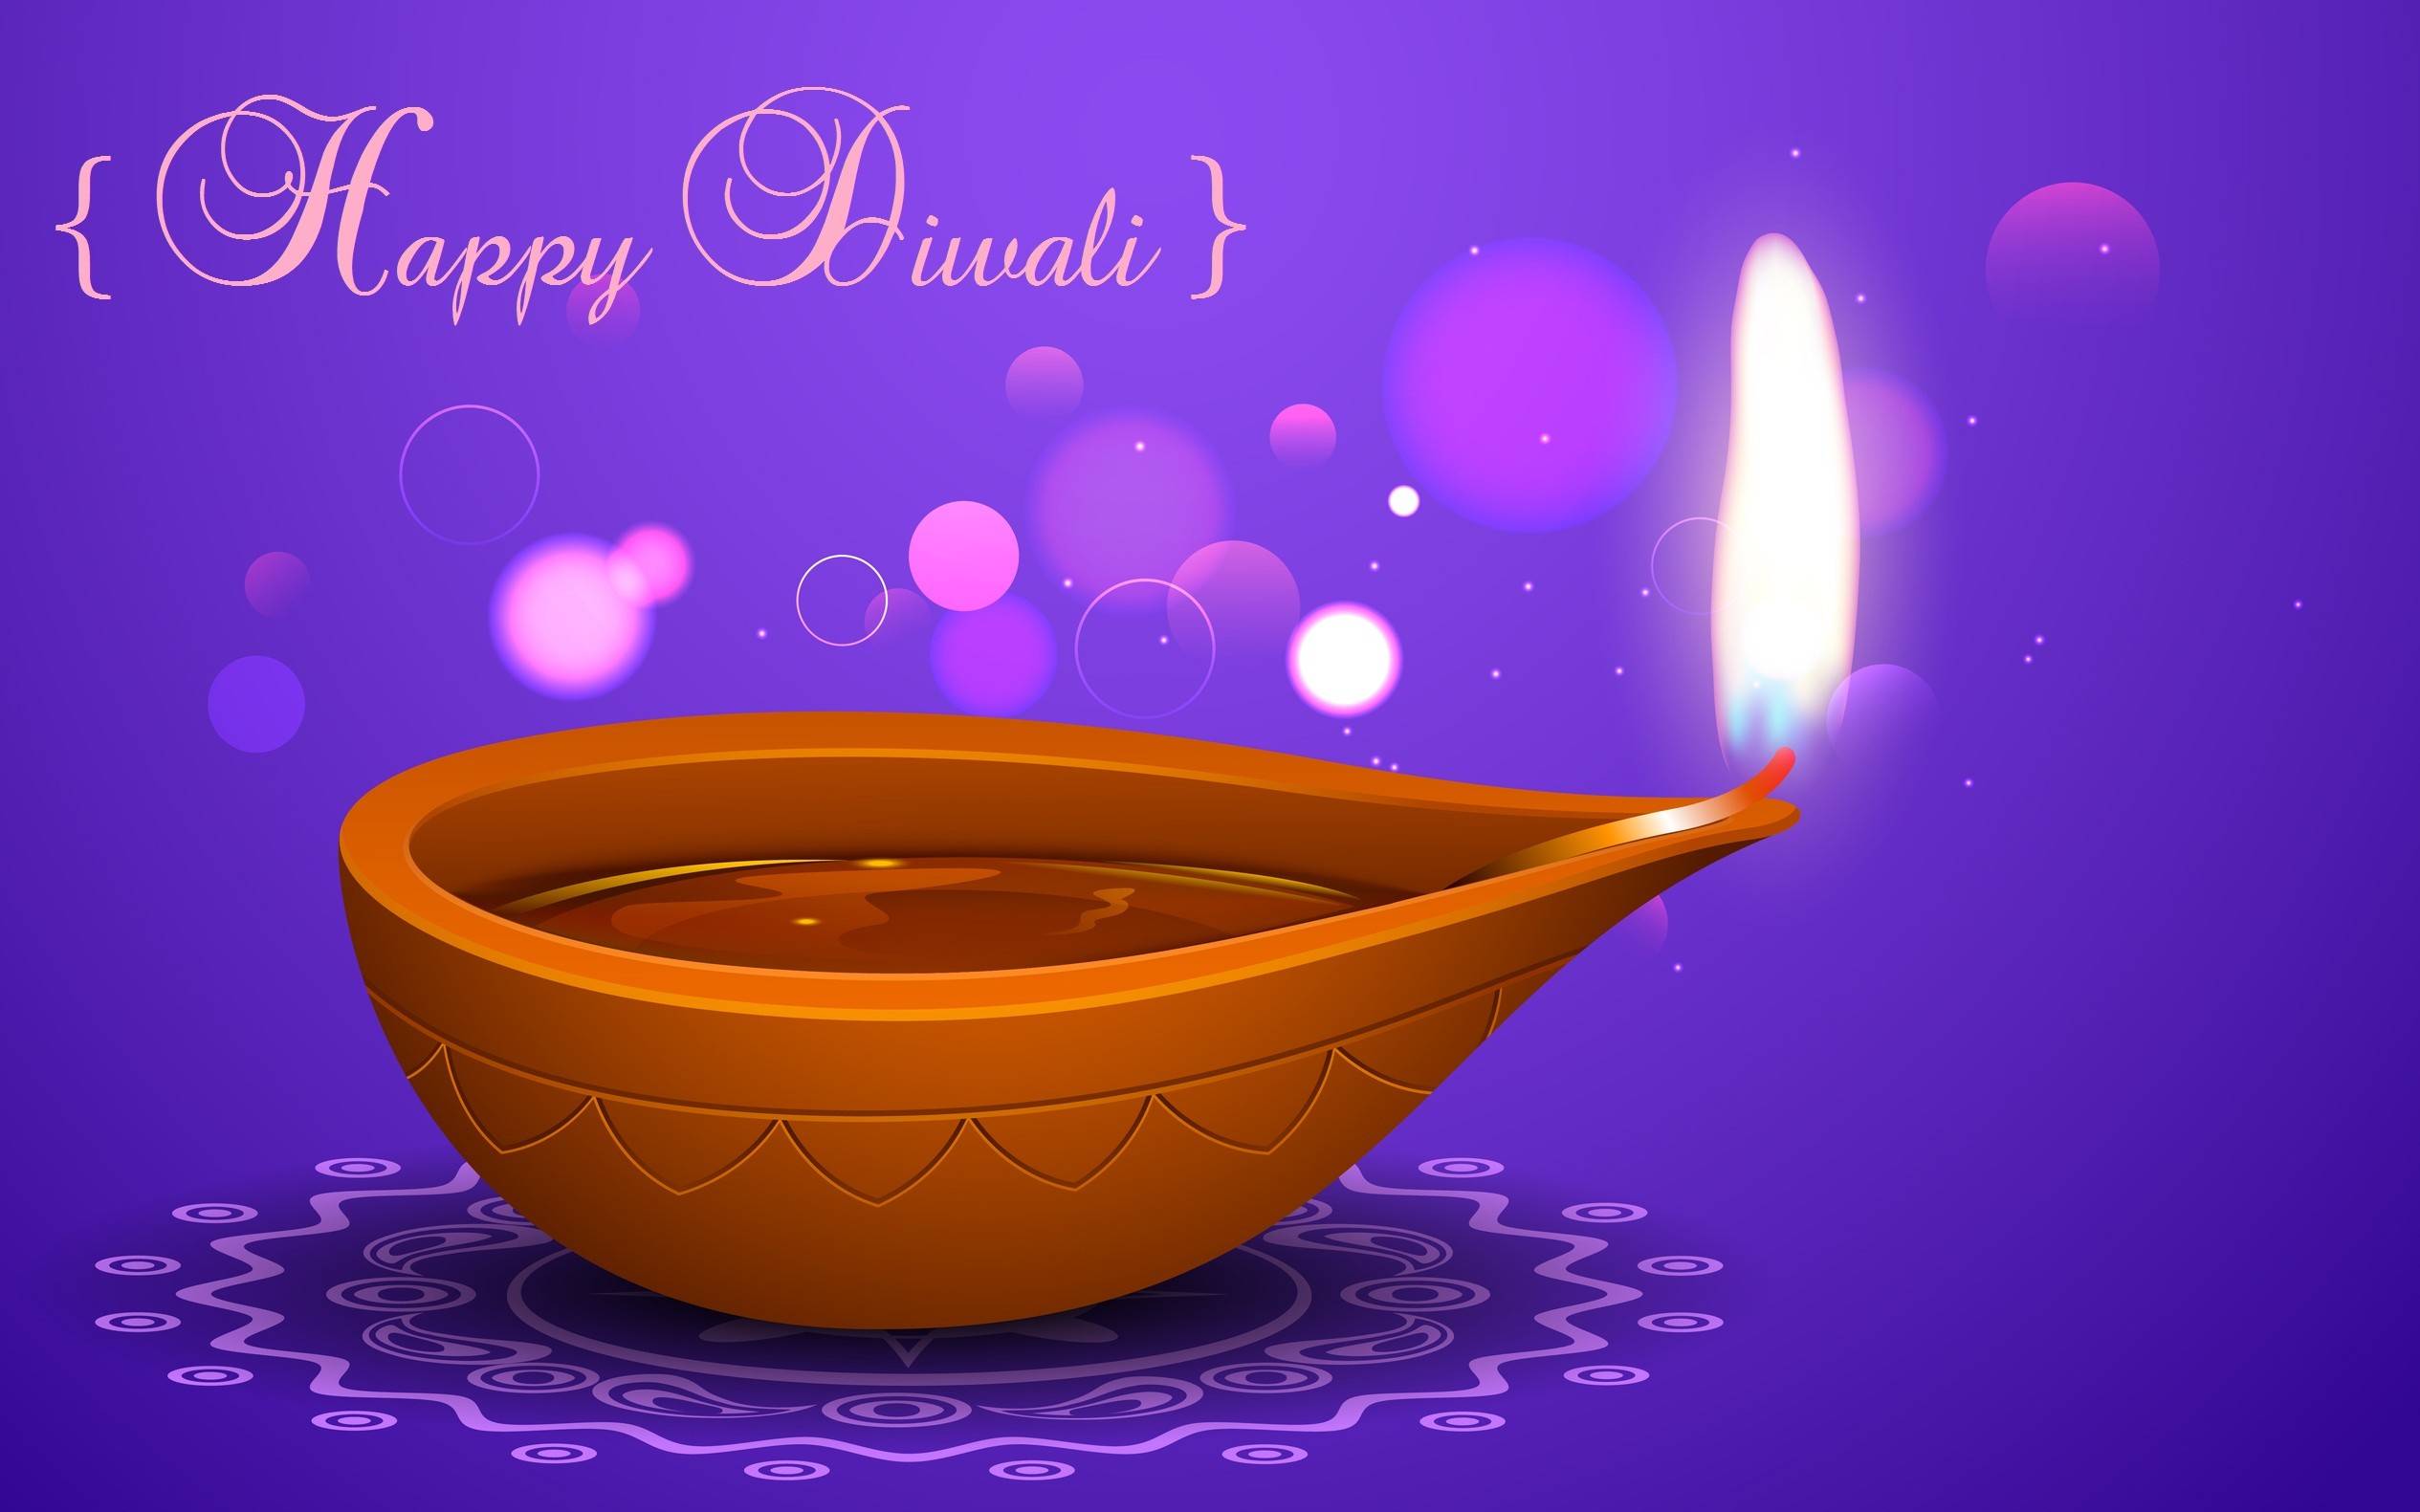 Happy Diwali HD Image Wallpaper Picture Photos